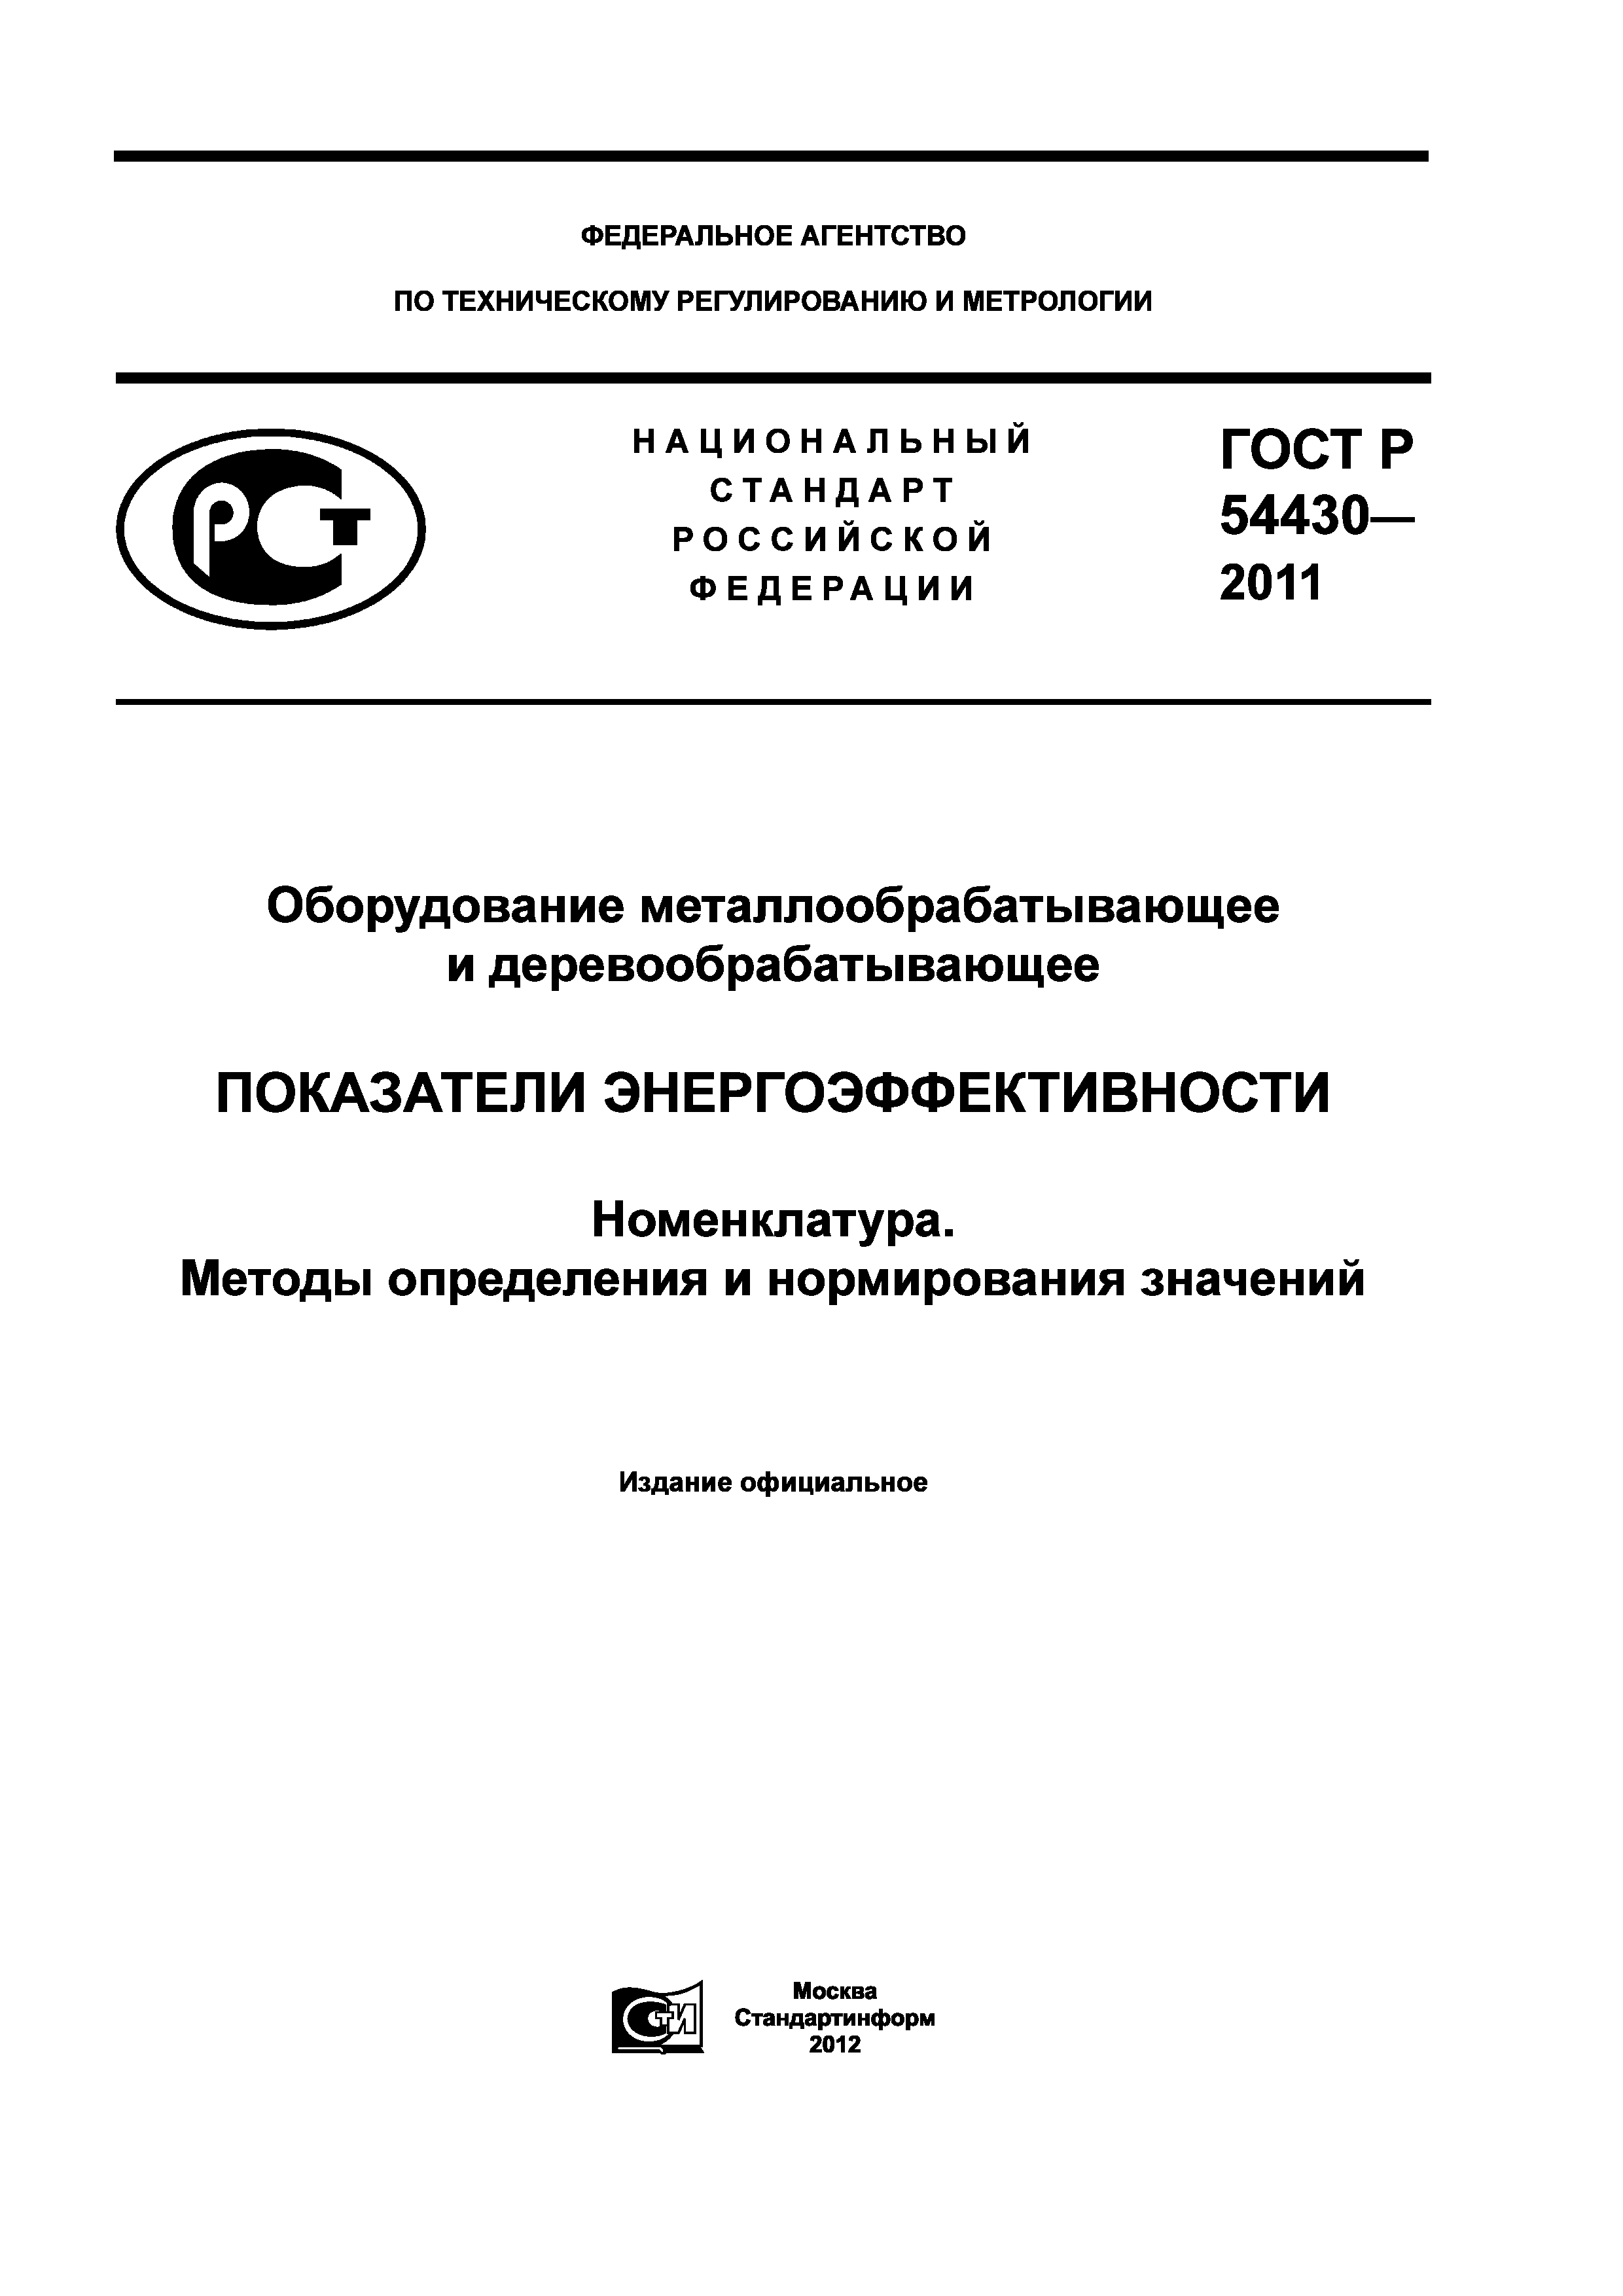 ГОСТ Р 54430-2011